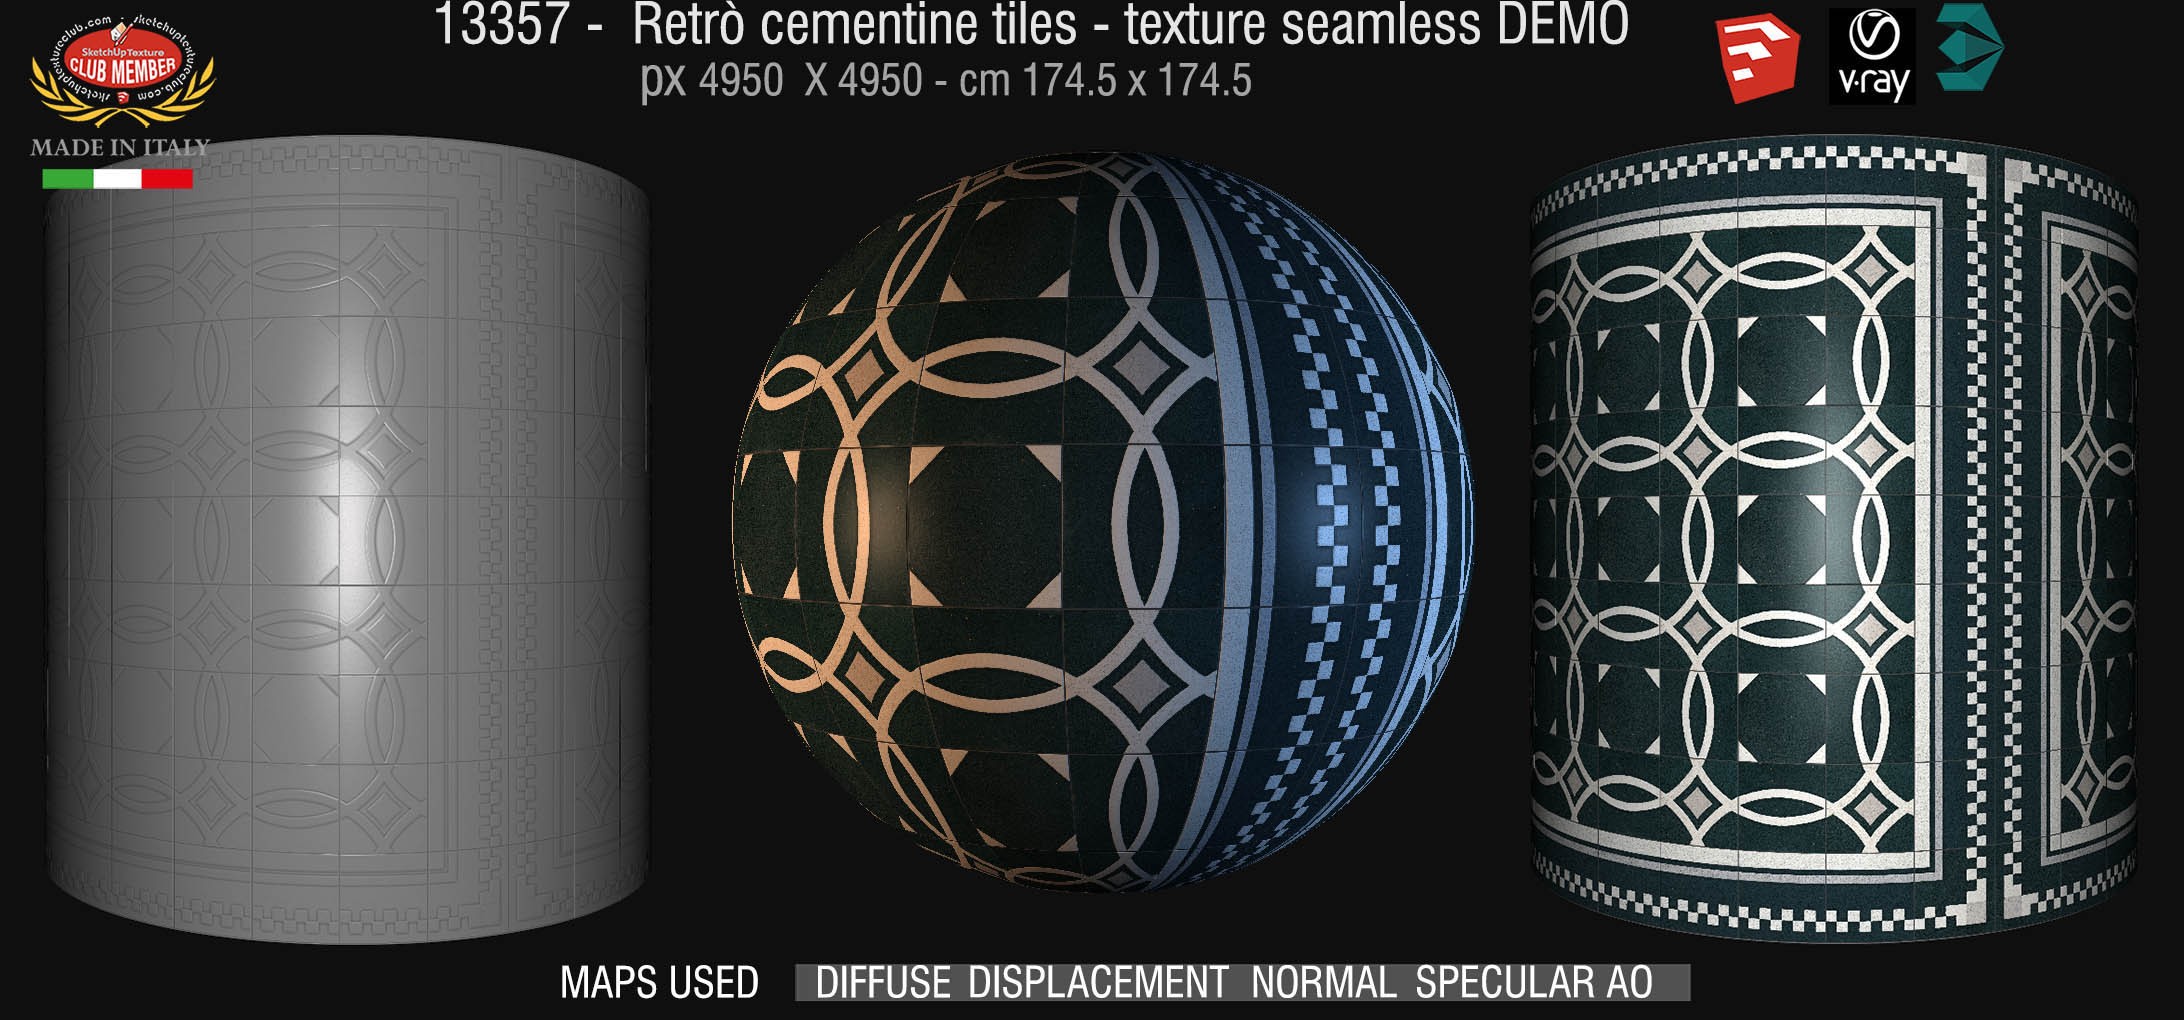 13357 retrò cementine tiles - texture seamless + maps DEMO